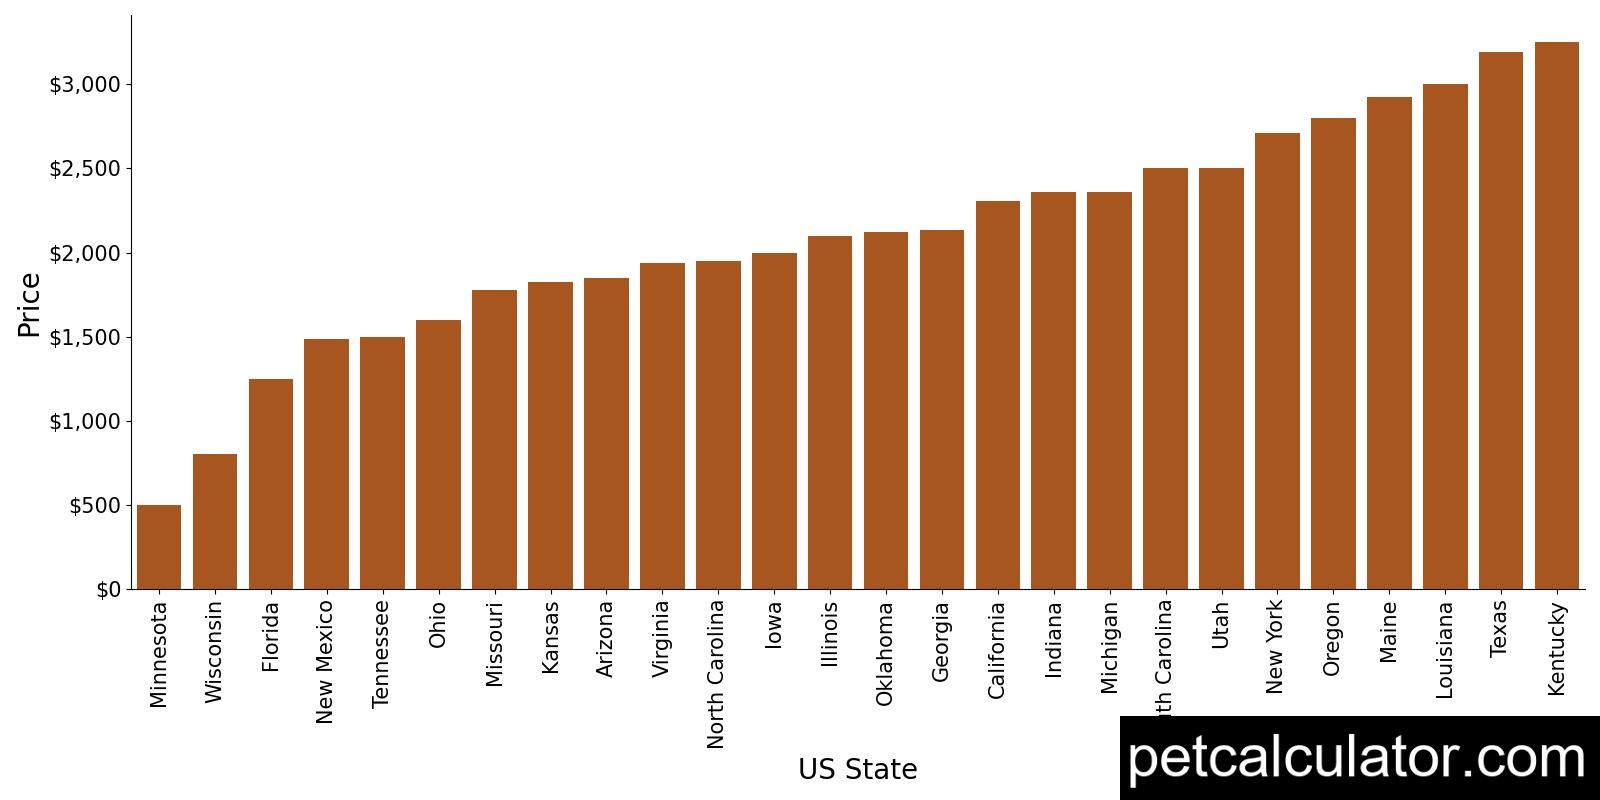 Price of Bullmastiff by US State 